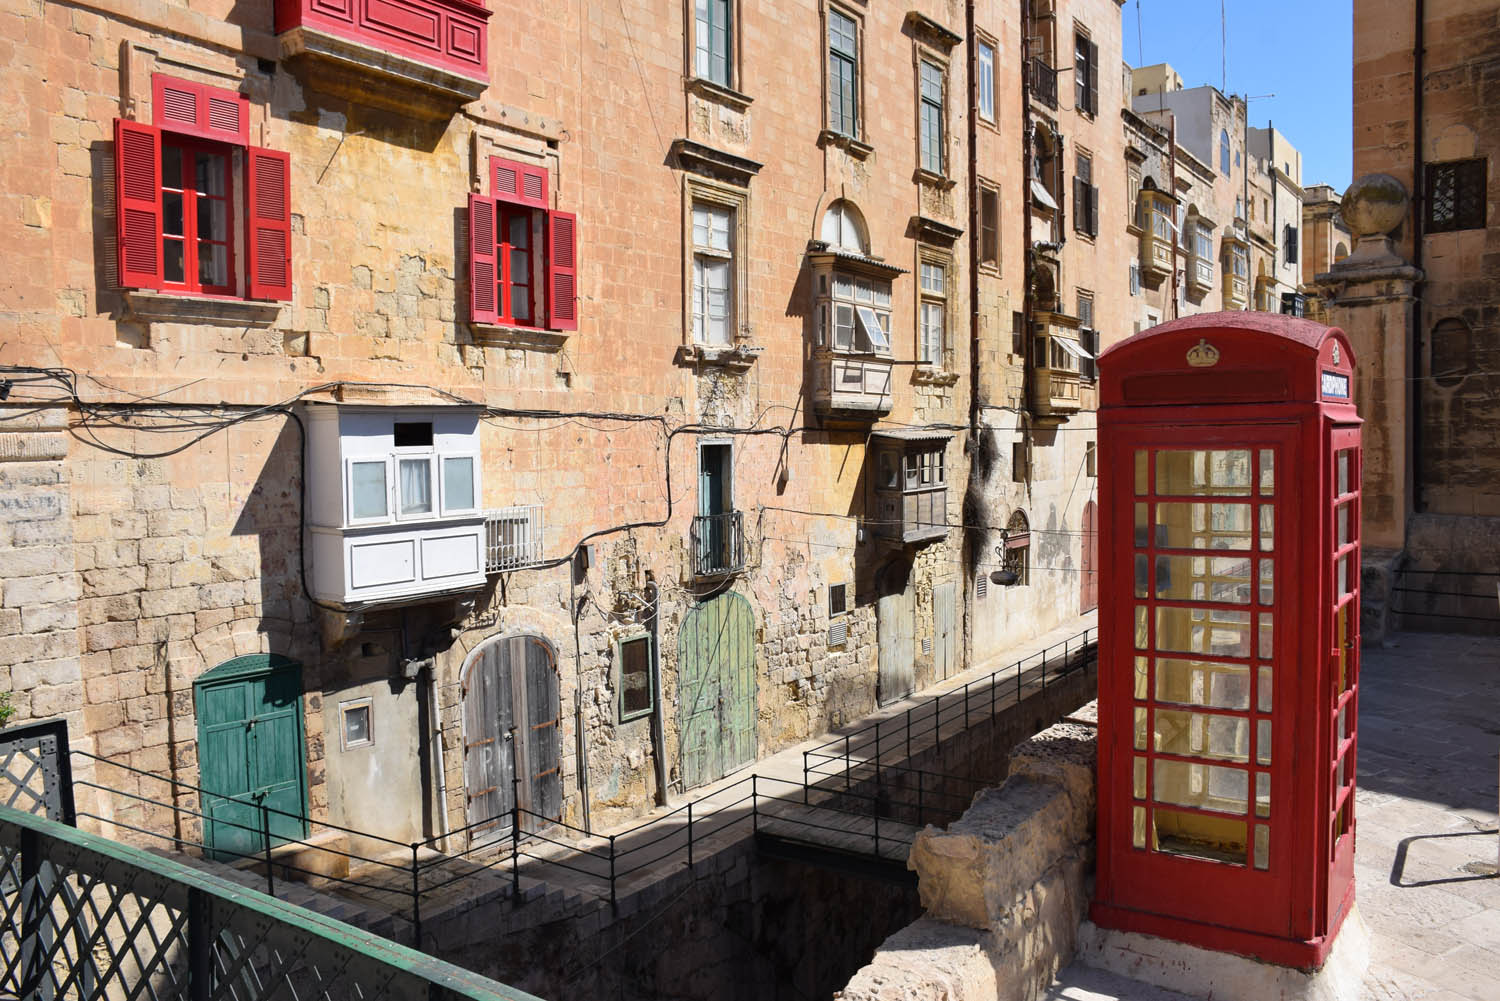 Cabine telefônica inglesa na capital maltesa, Valletta - herança do passado colonial